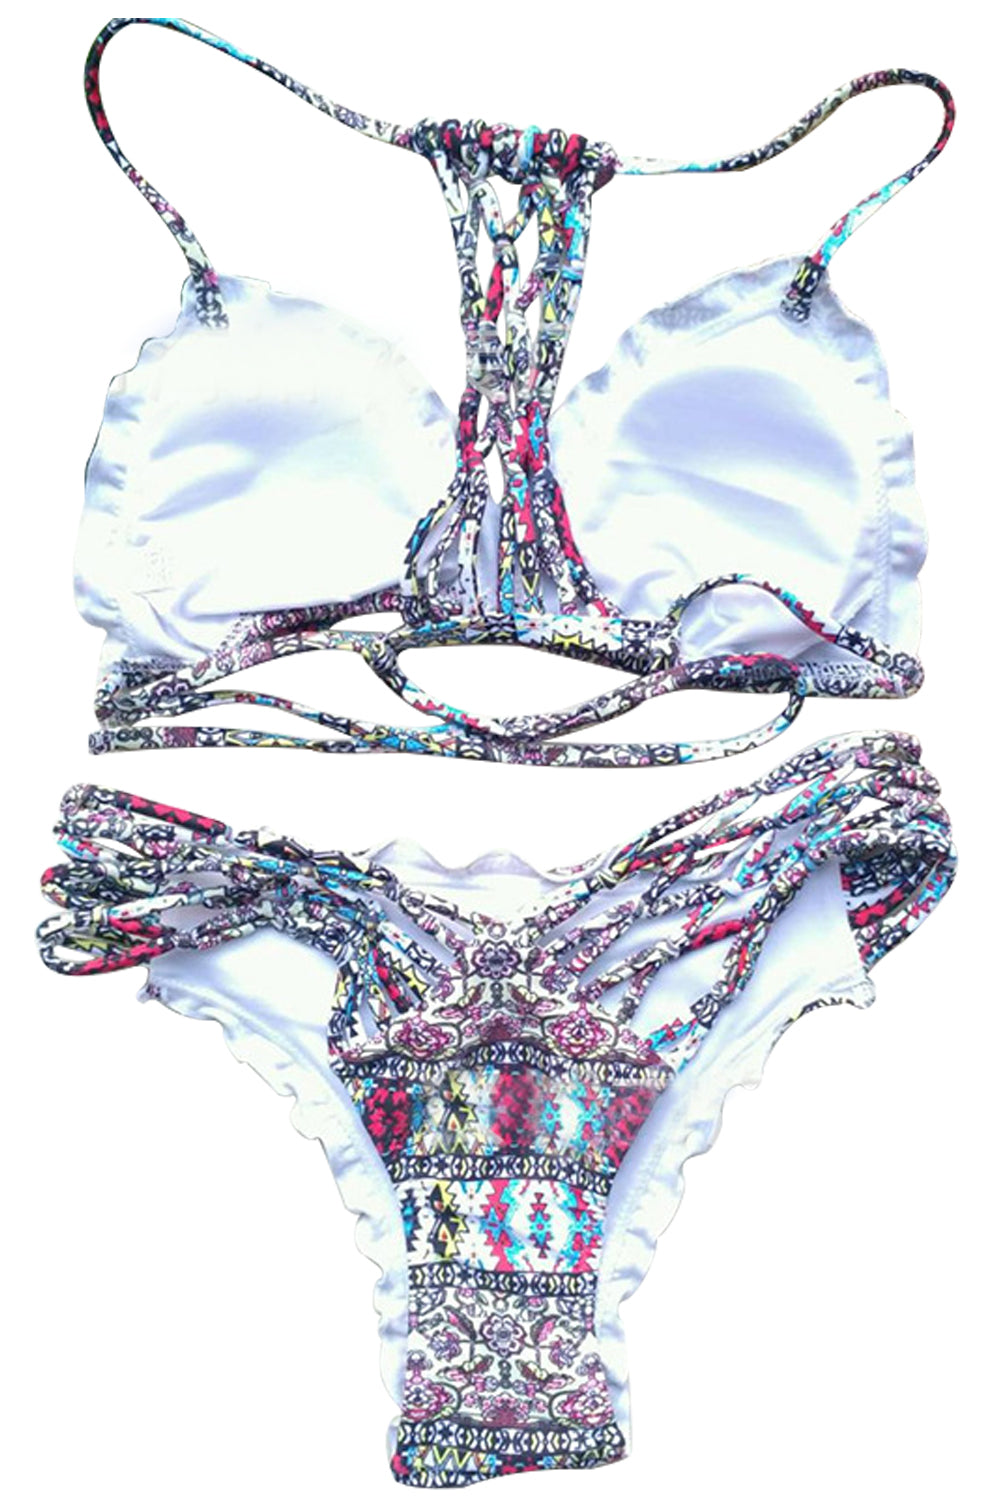 Iyasson Diamond Printing Bikini Set With Less Coverage